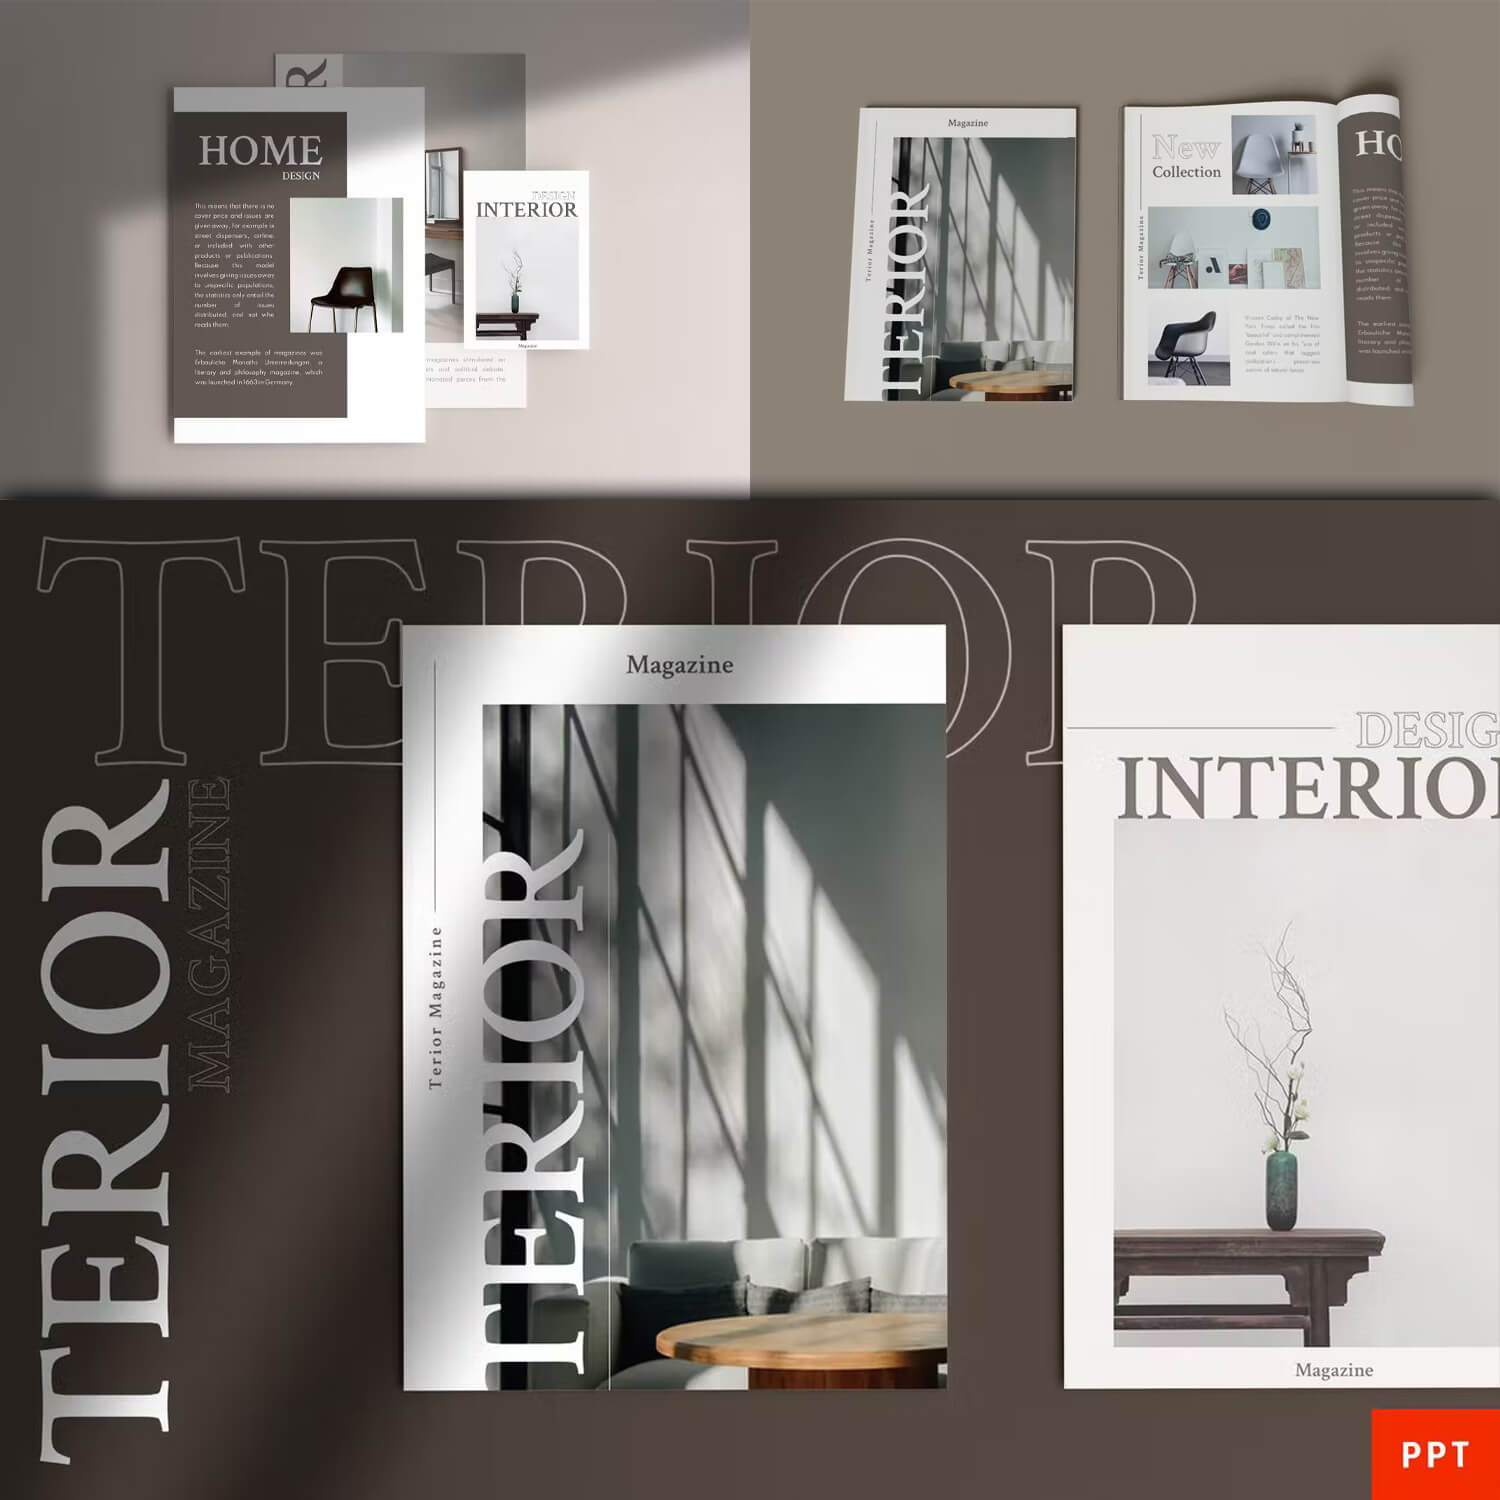 Terior - Furniture Magazine Powerpoint Template.